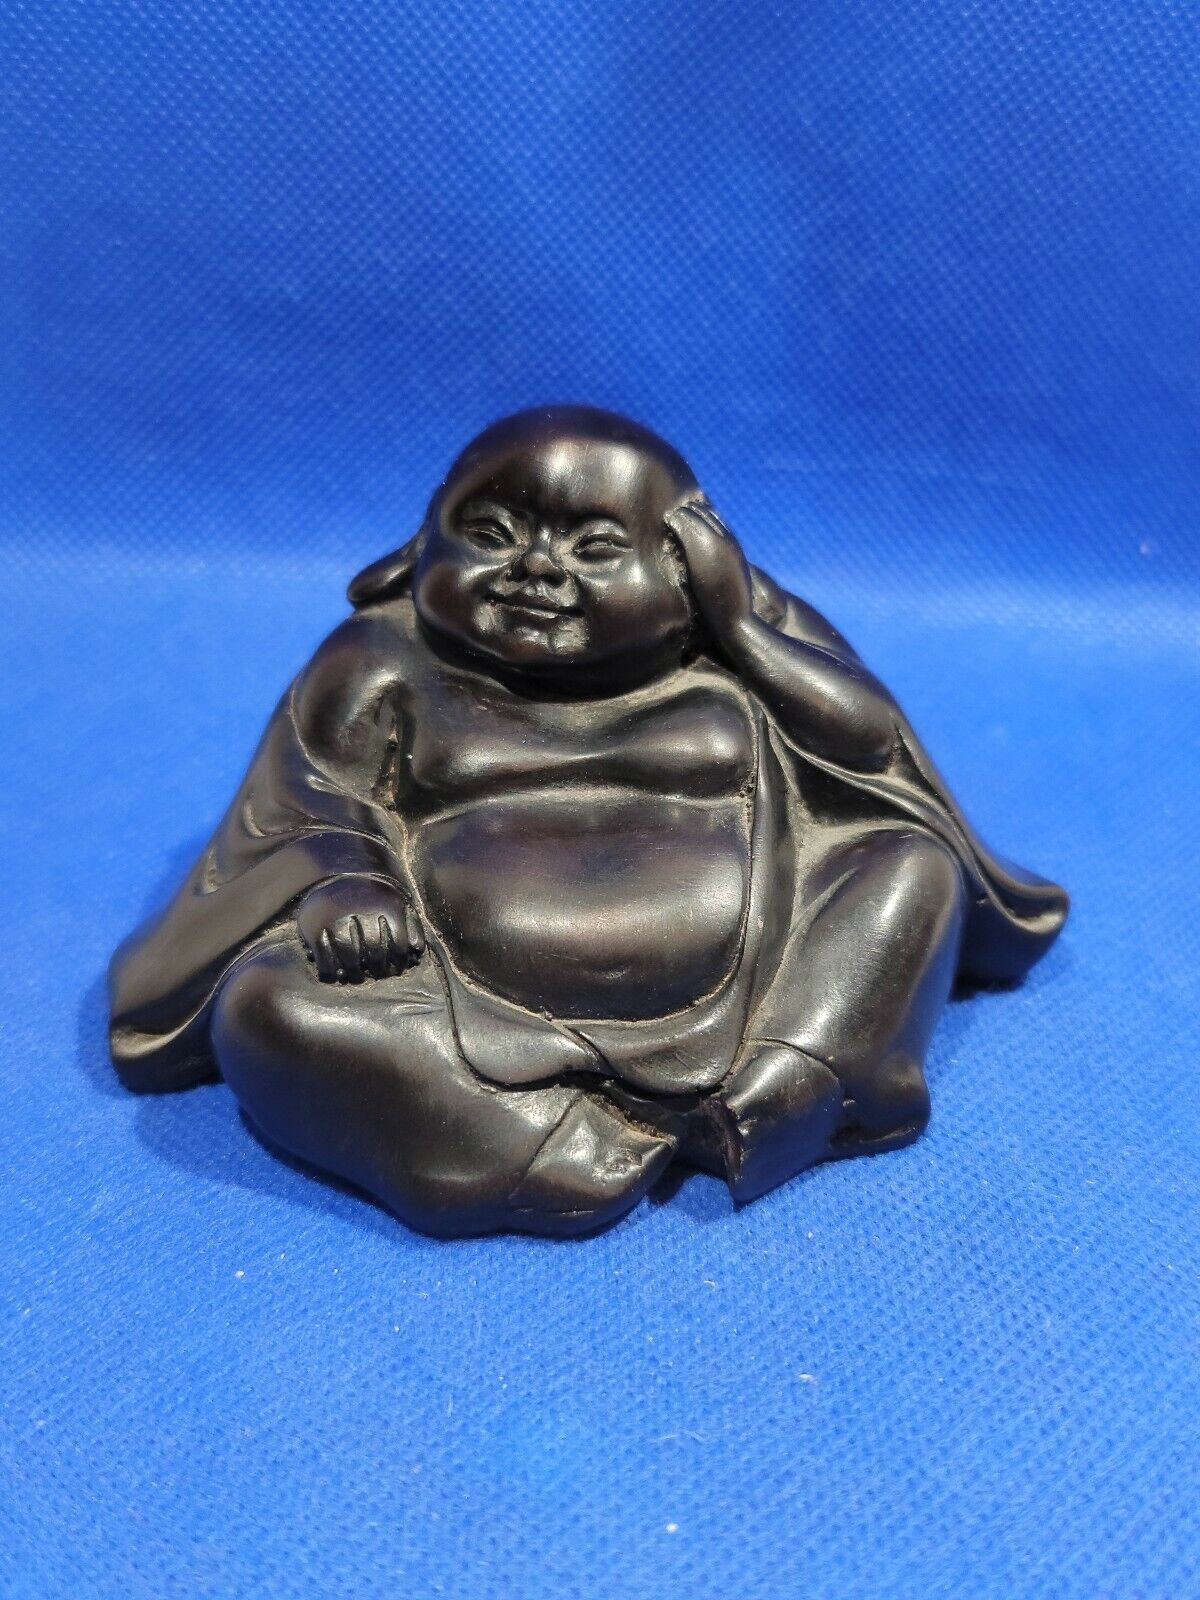 Vintage Buddha Resin Figurine Netsuke hidden Risqué picture Desktop shelf Decor 